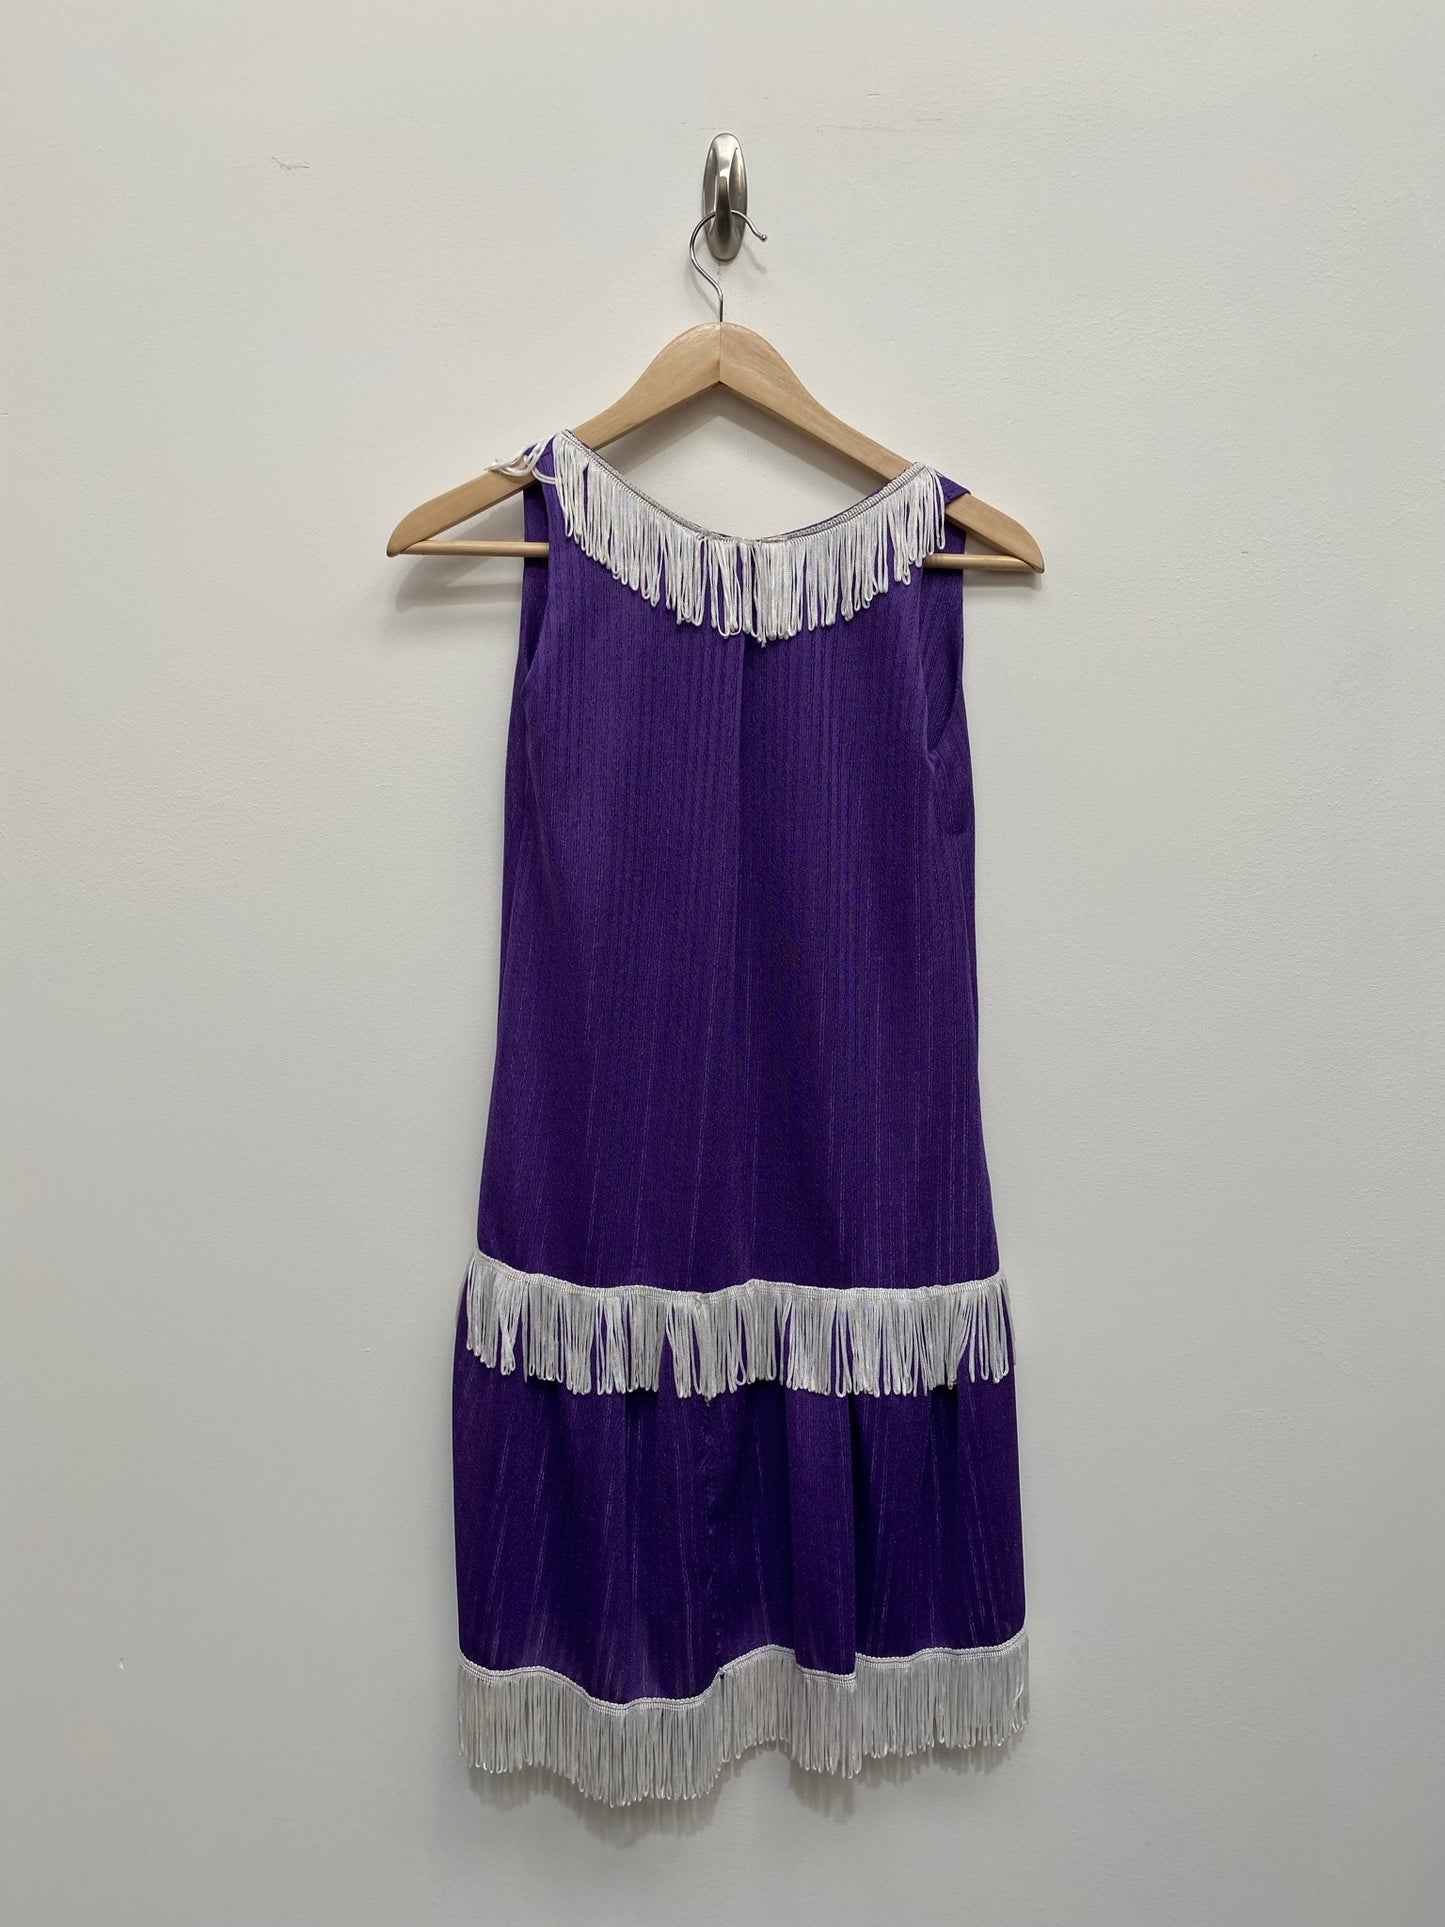 1920s style flapper dress Size XS (uk 8) - Vintage clothing